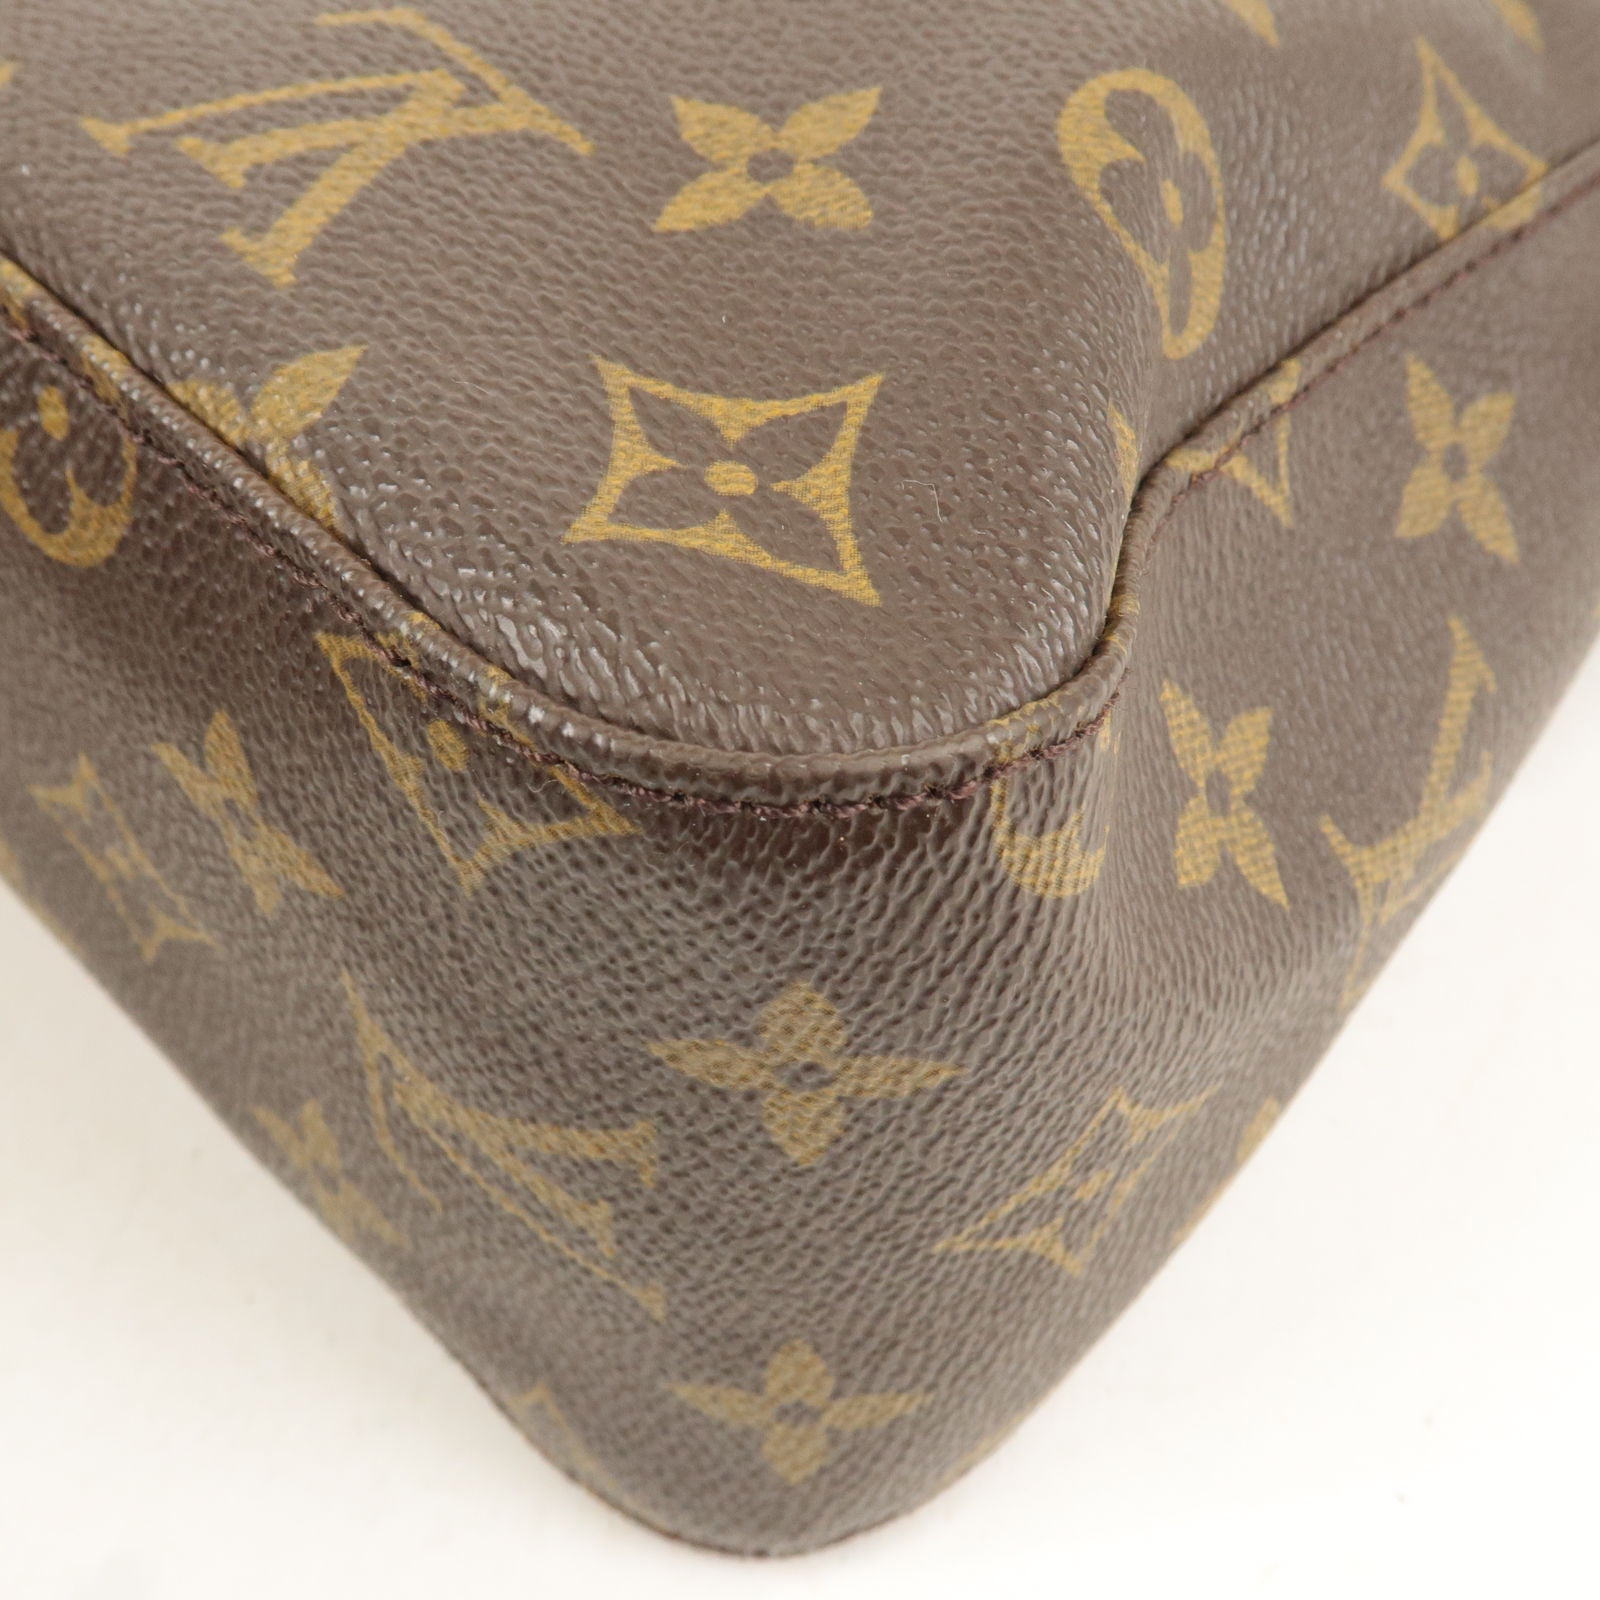 Louis Vuitton 2009 pre-owned Graffiti Monogram Keepall 50 Travel Bag -  Farfetch